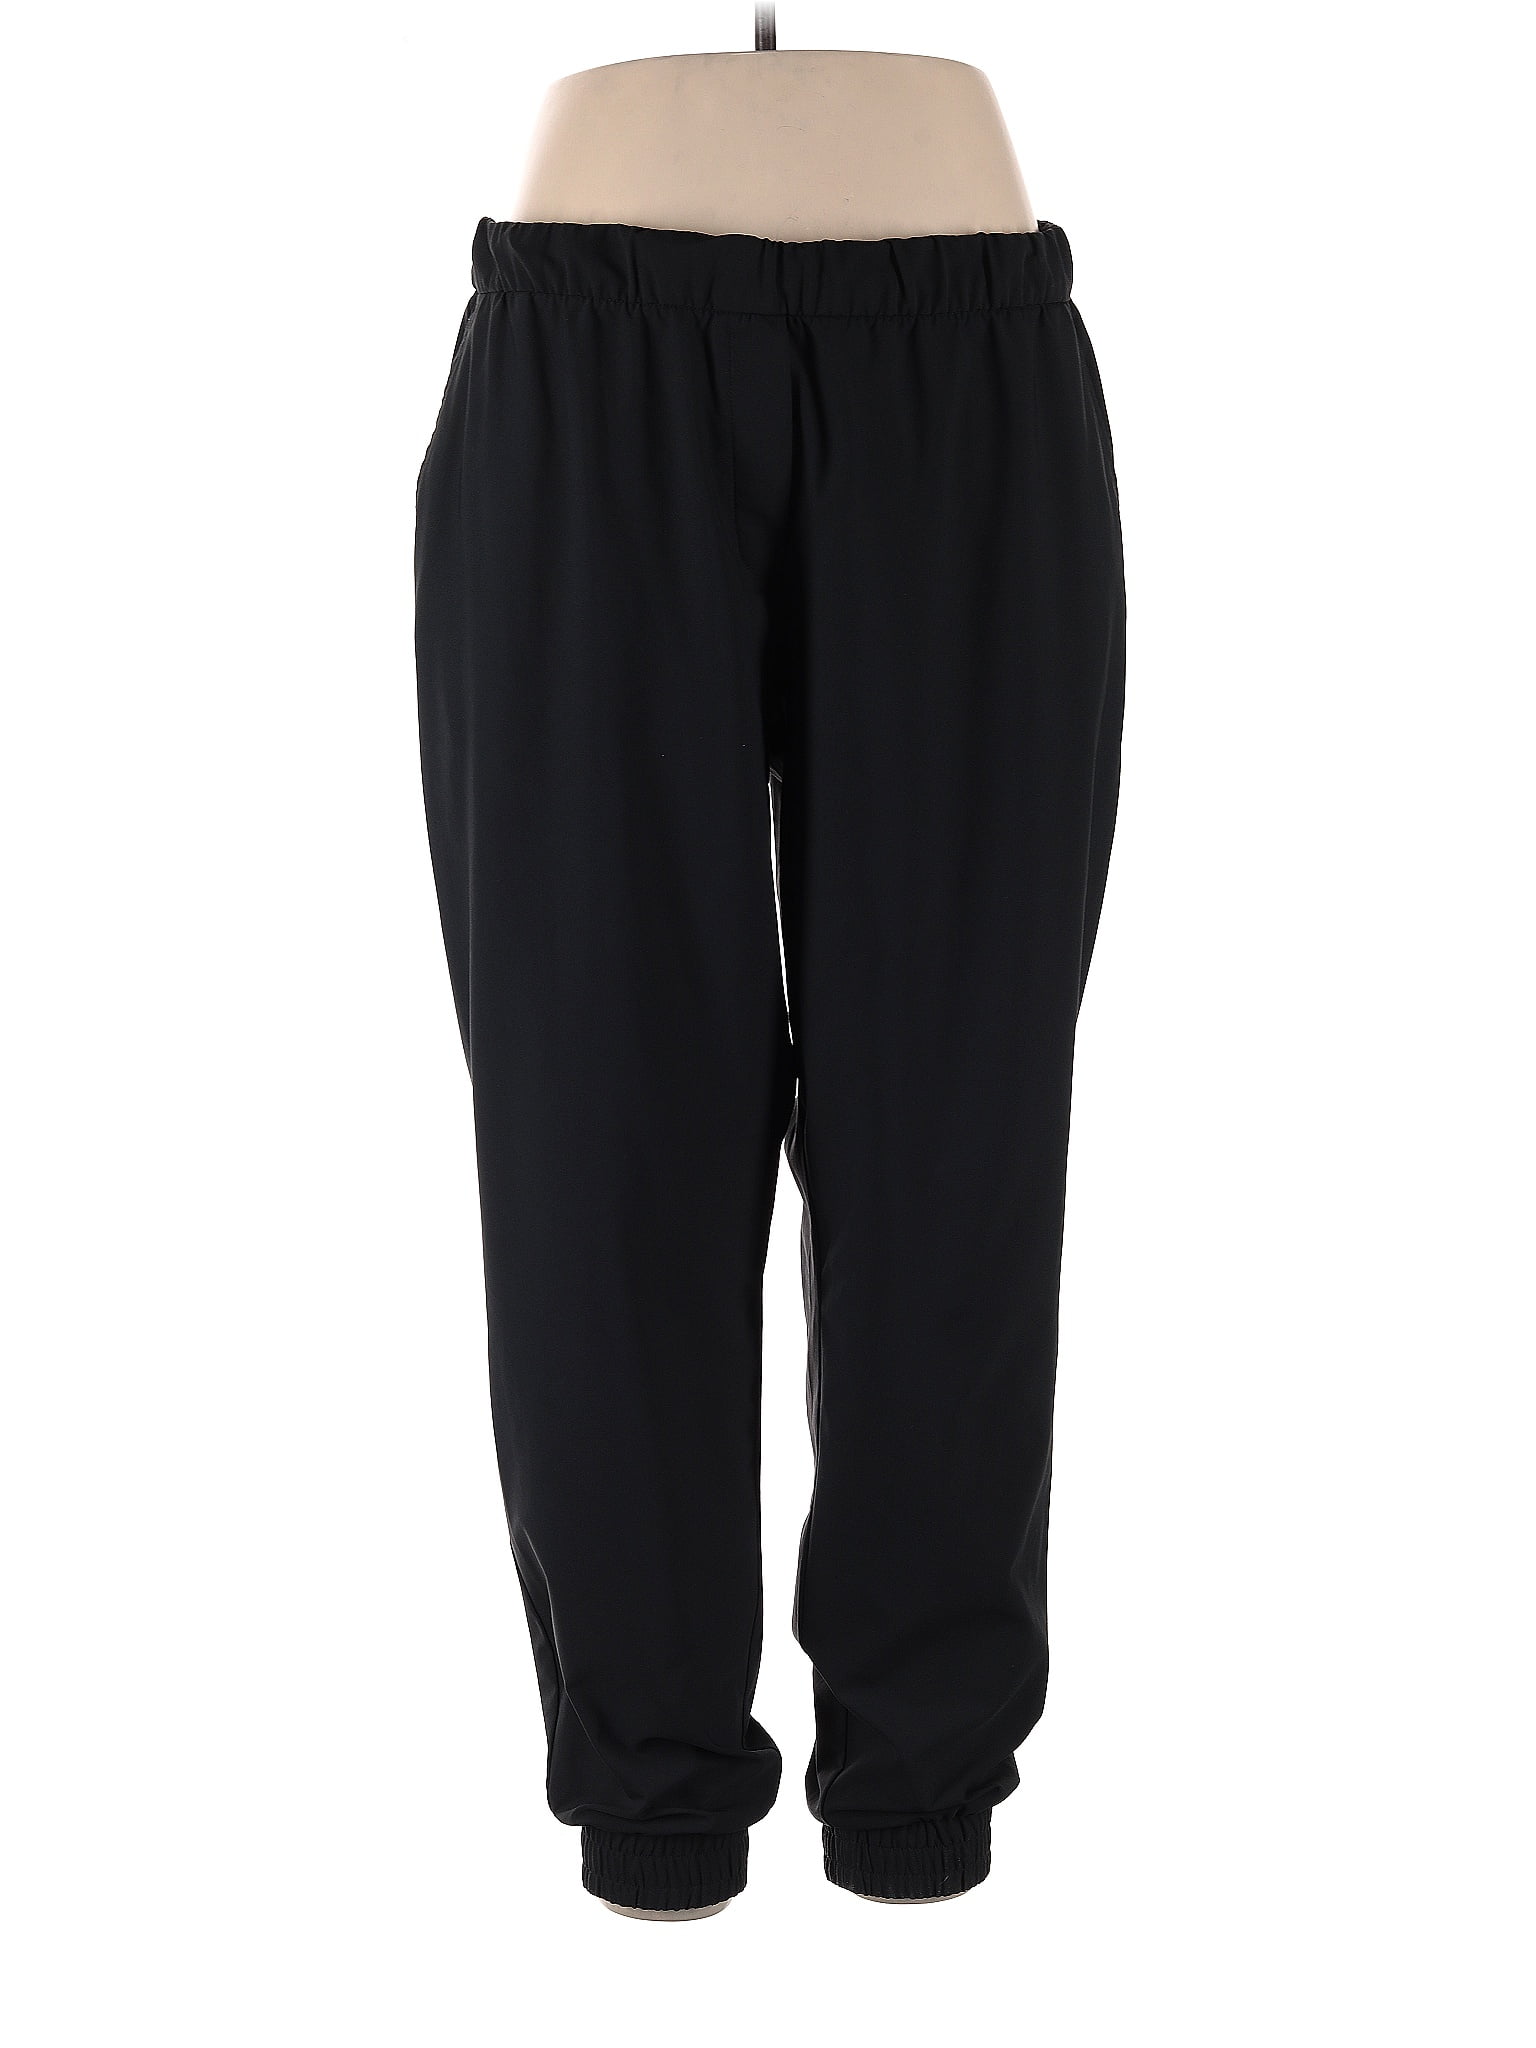 Unbranded Black Sweatpants Size XL - 63% off